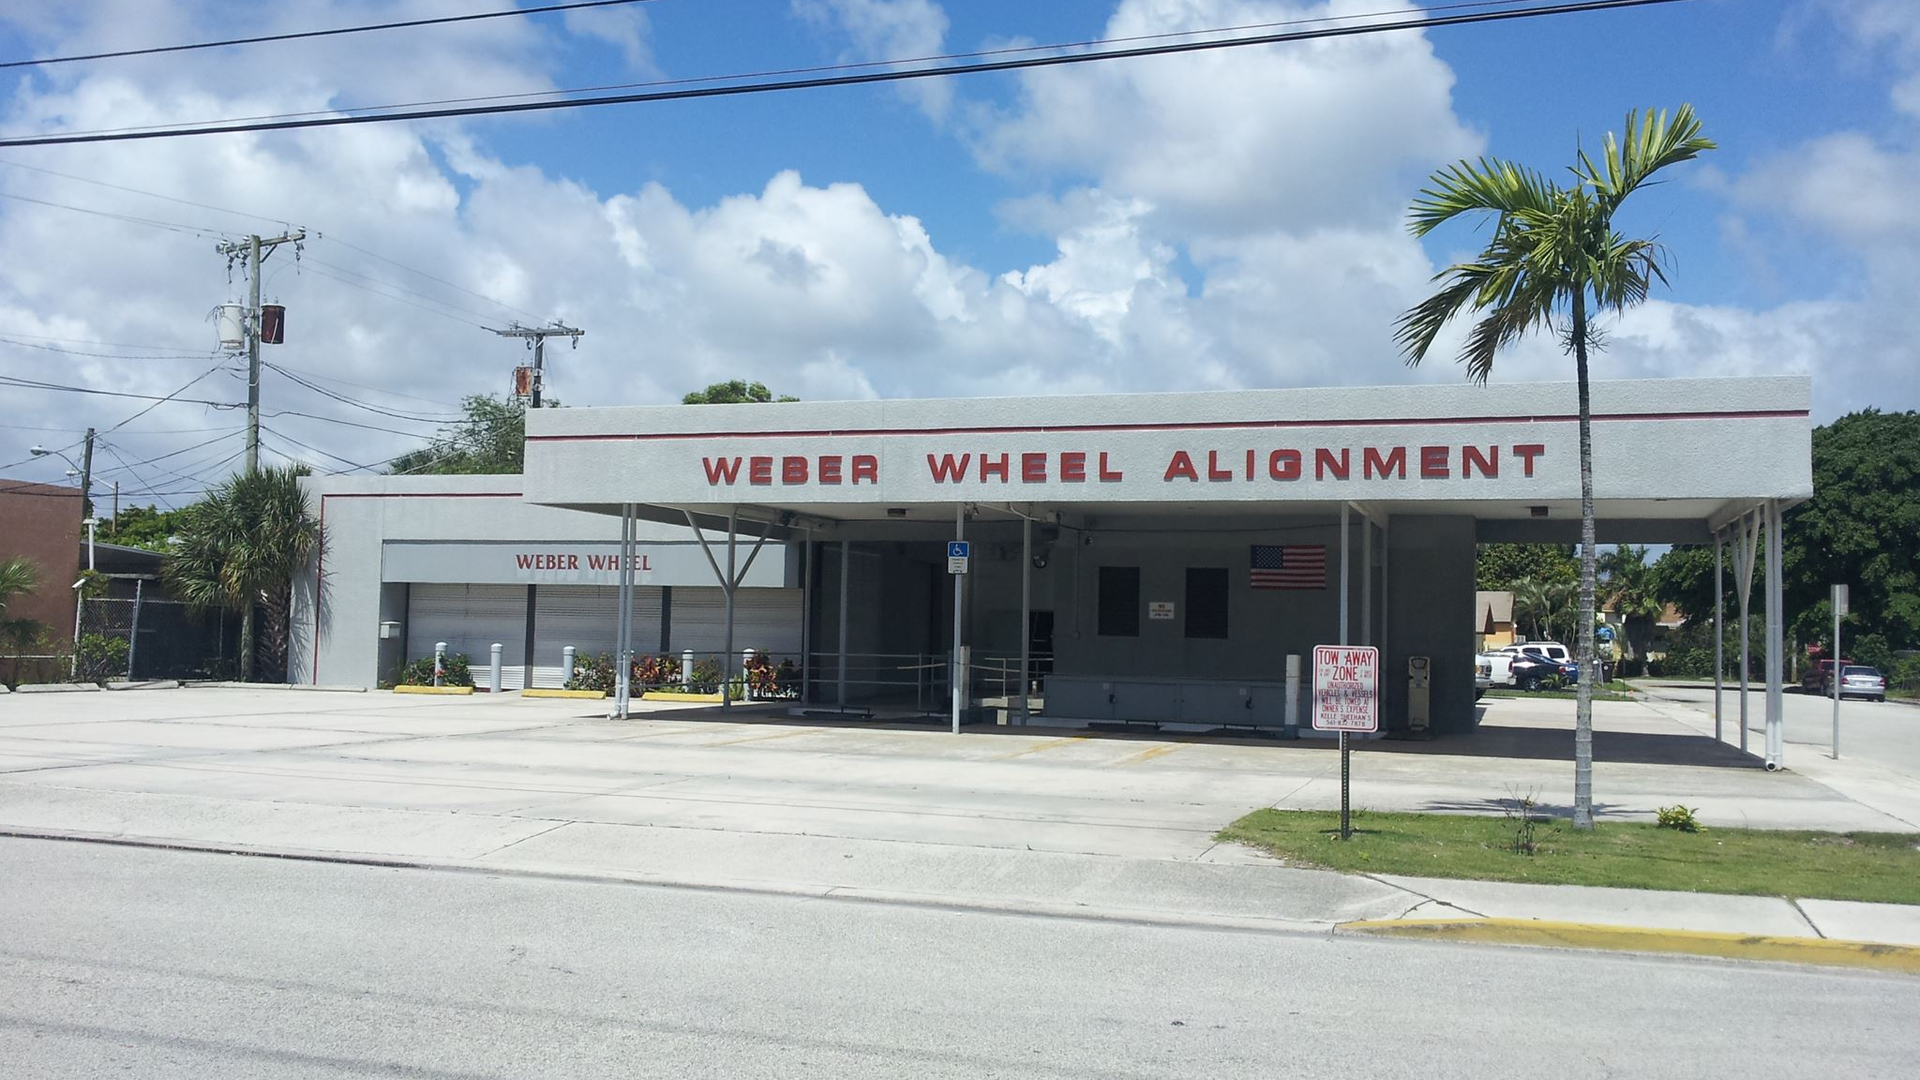 Weber Wheel Alignment in West Palm Beach, FL